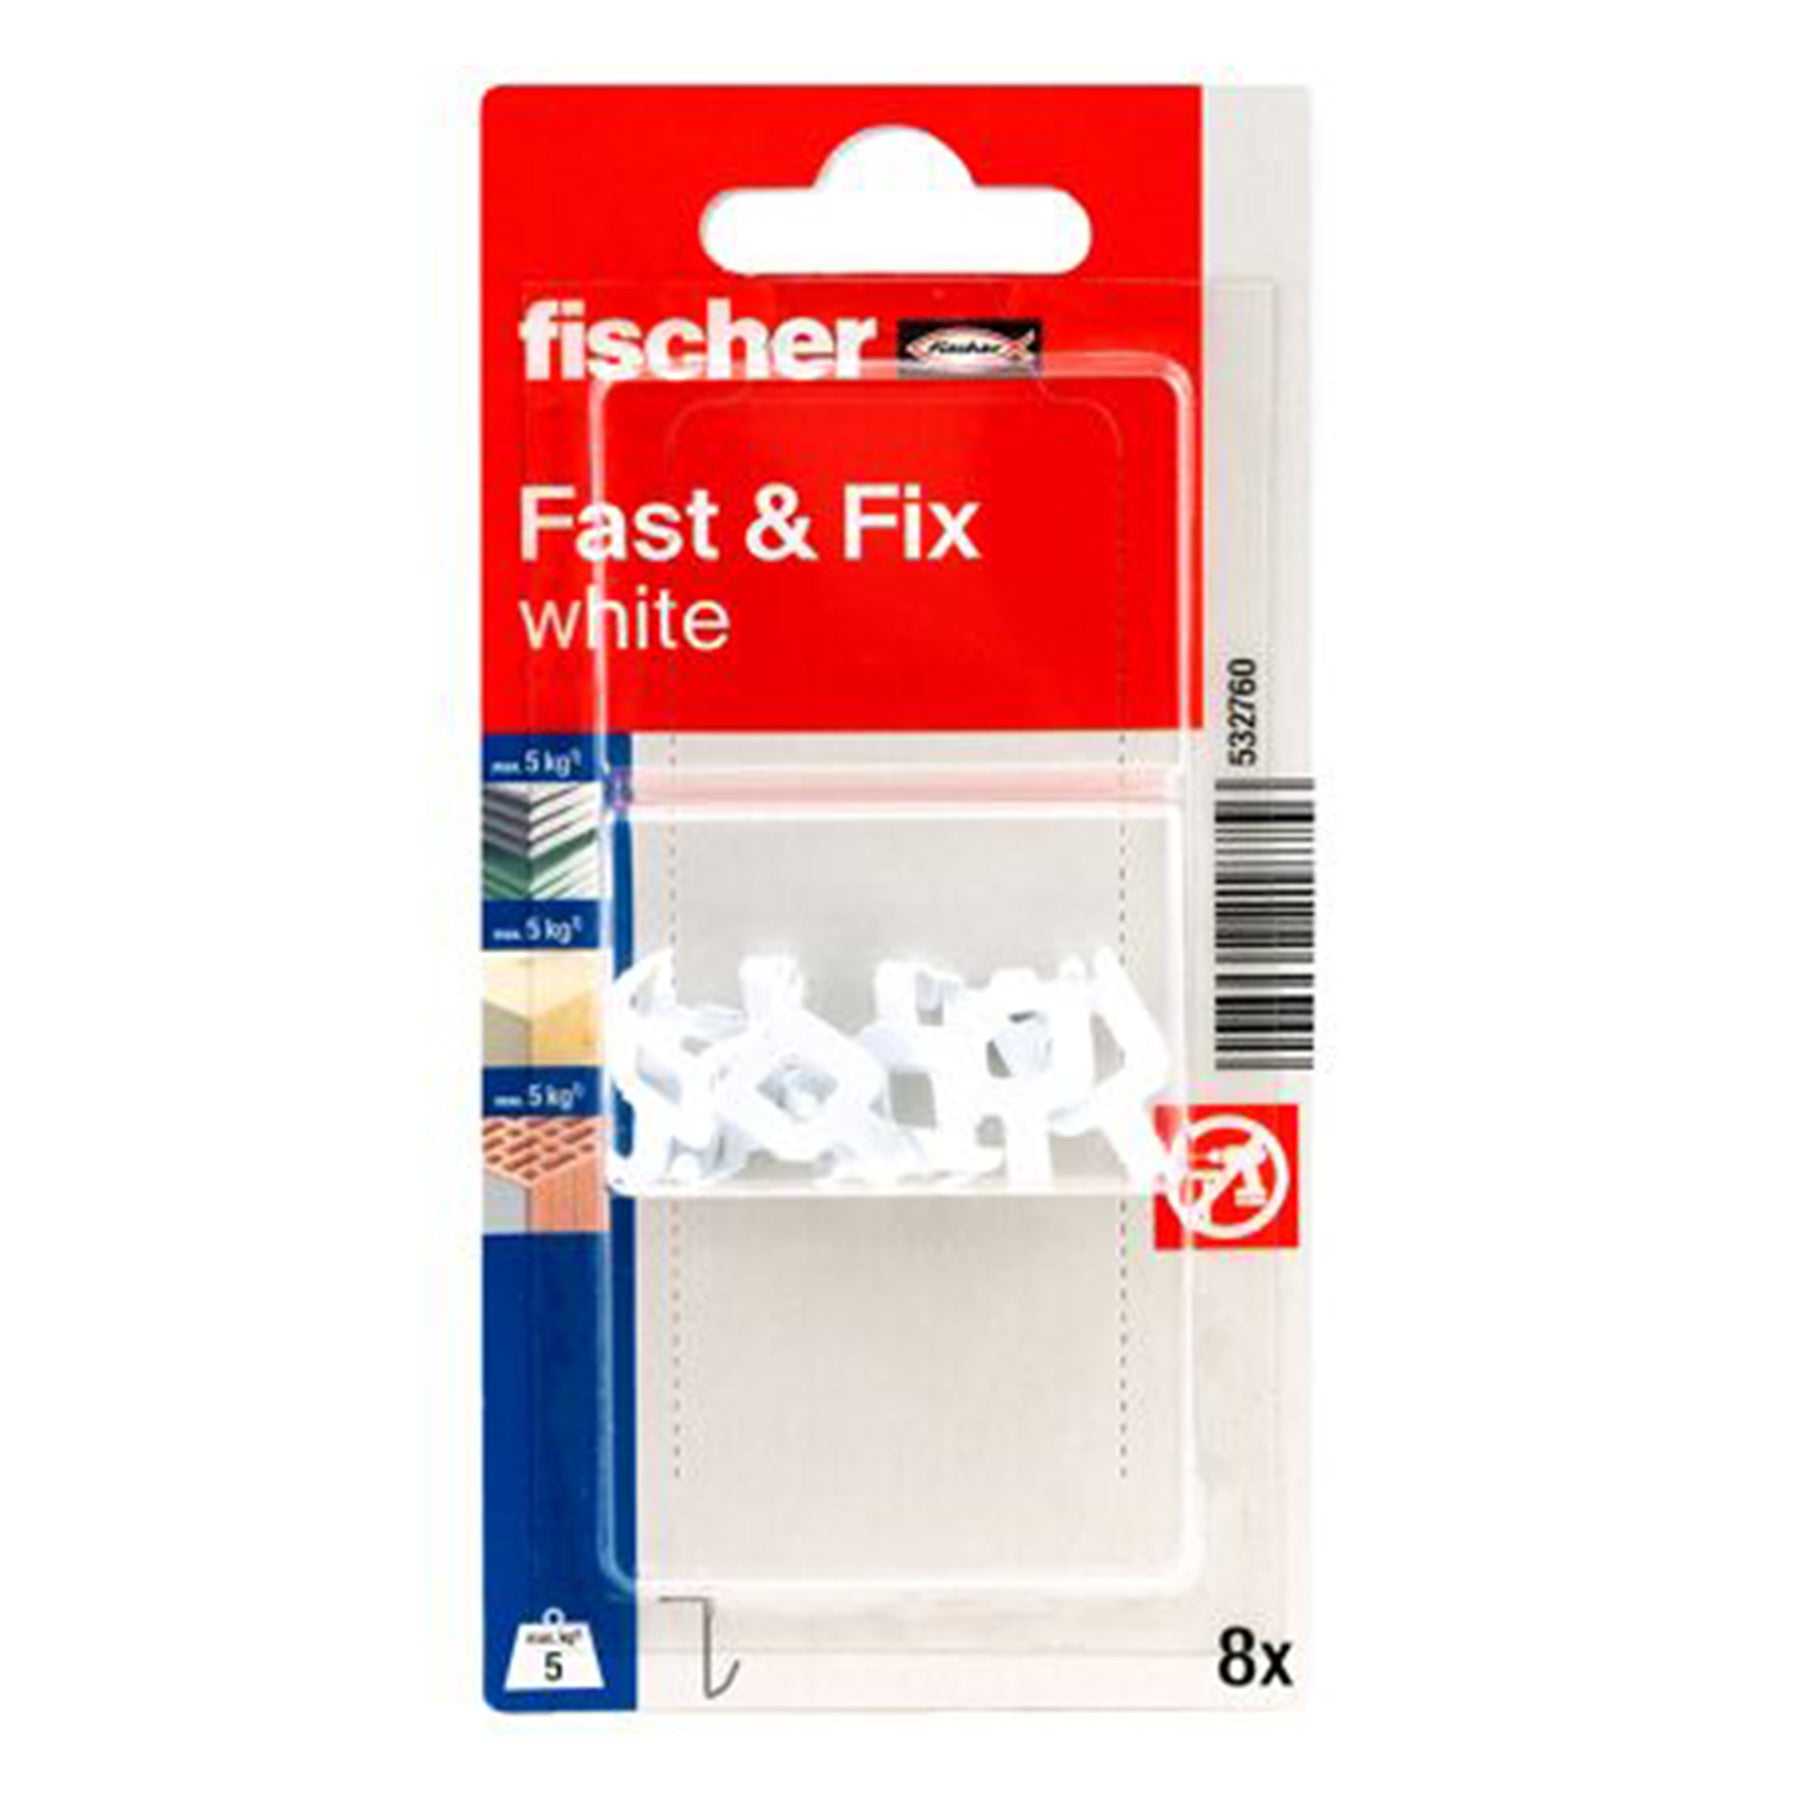 Fast & Fix black SB-card - white